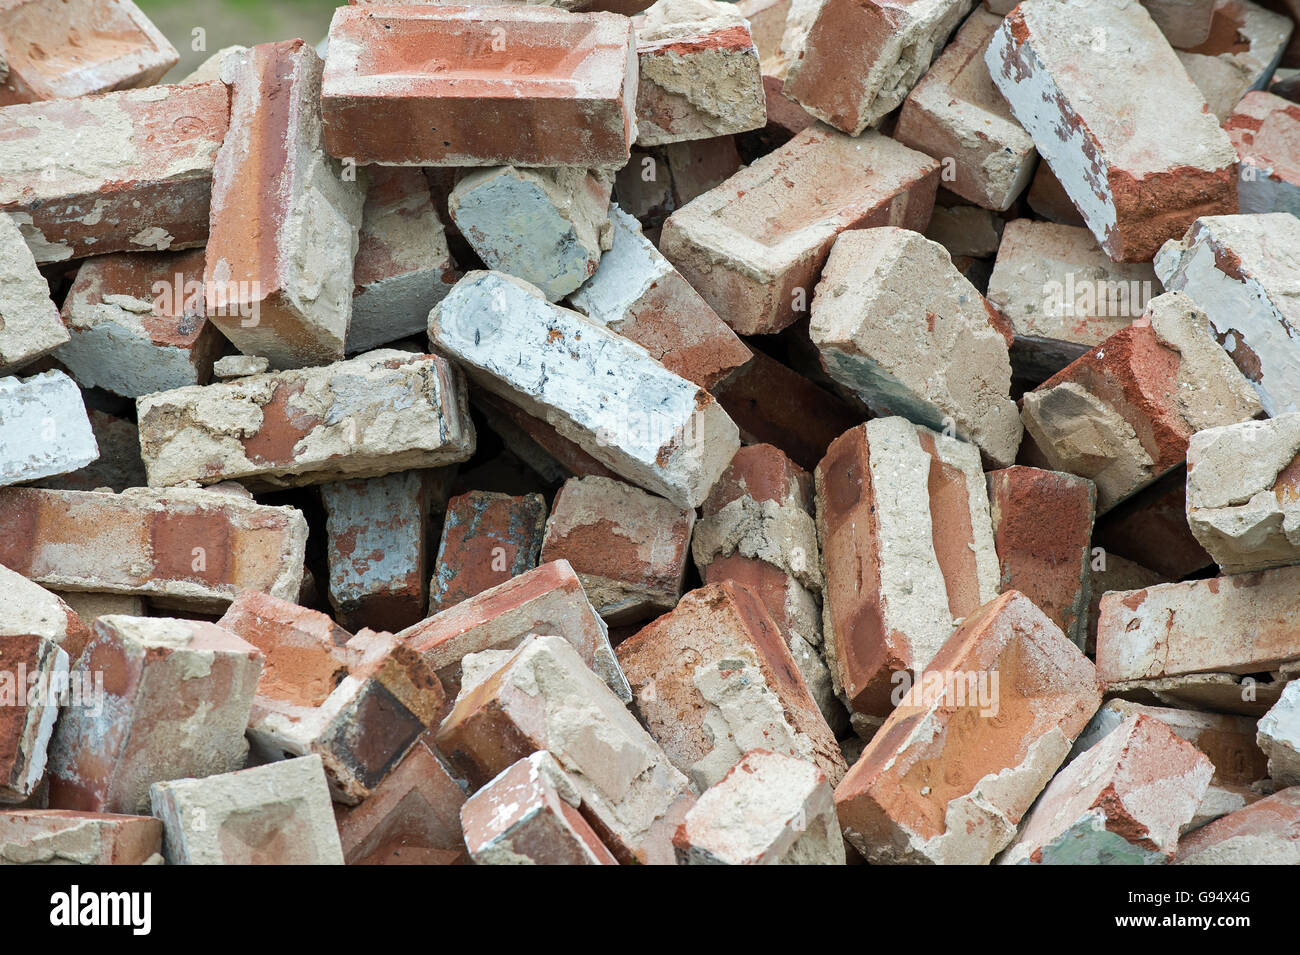 Bricks in a pile Stock Photo